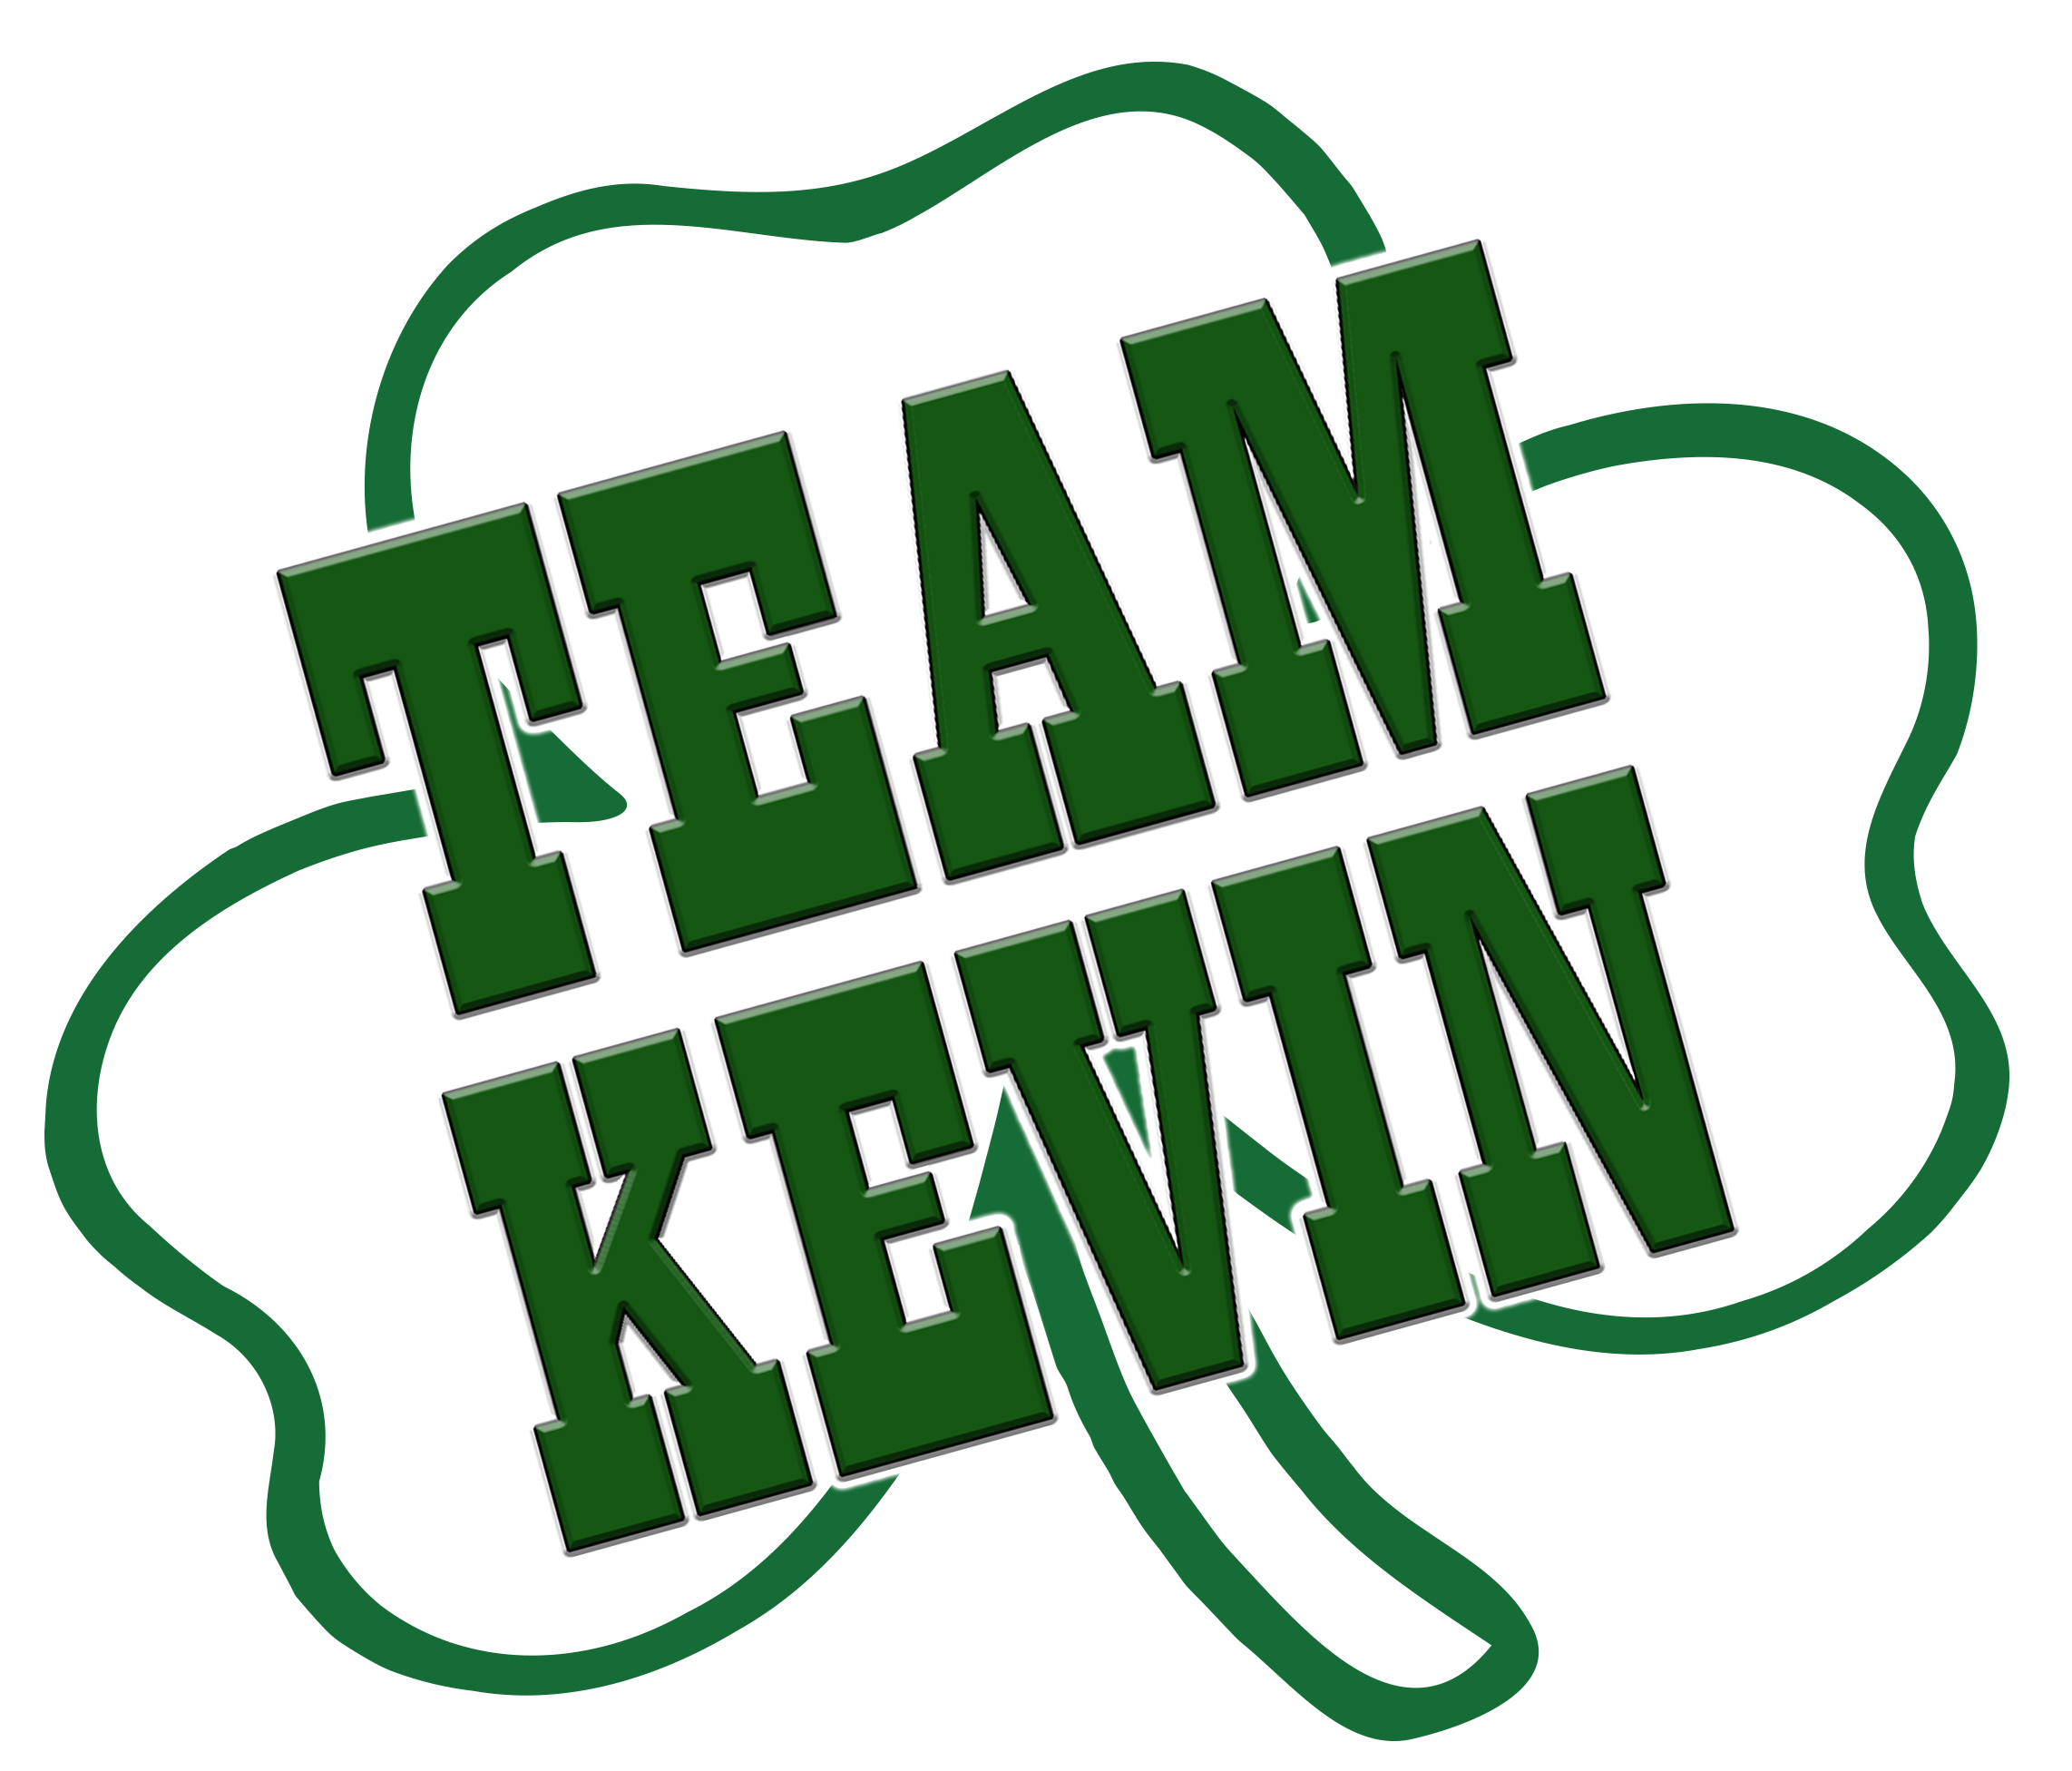 Team Kevin